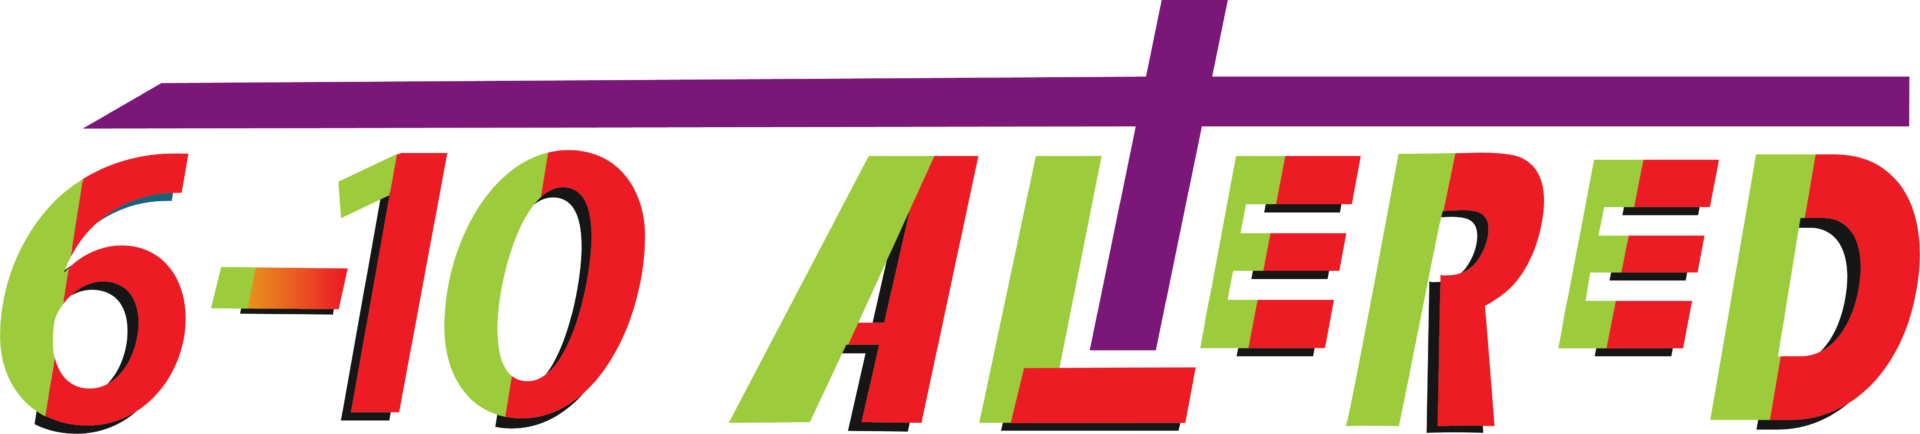 Teens Altered logo